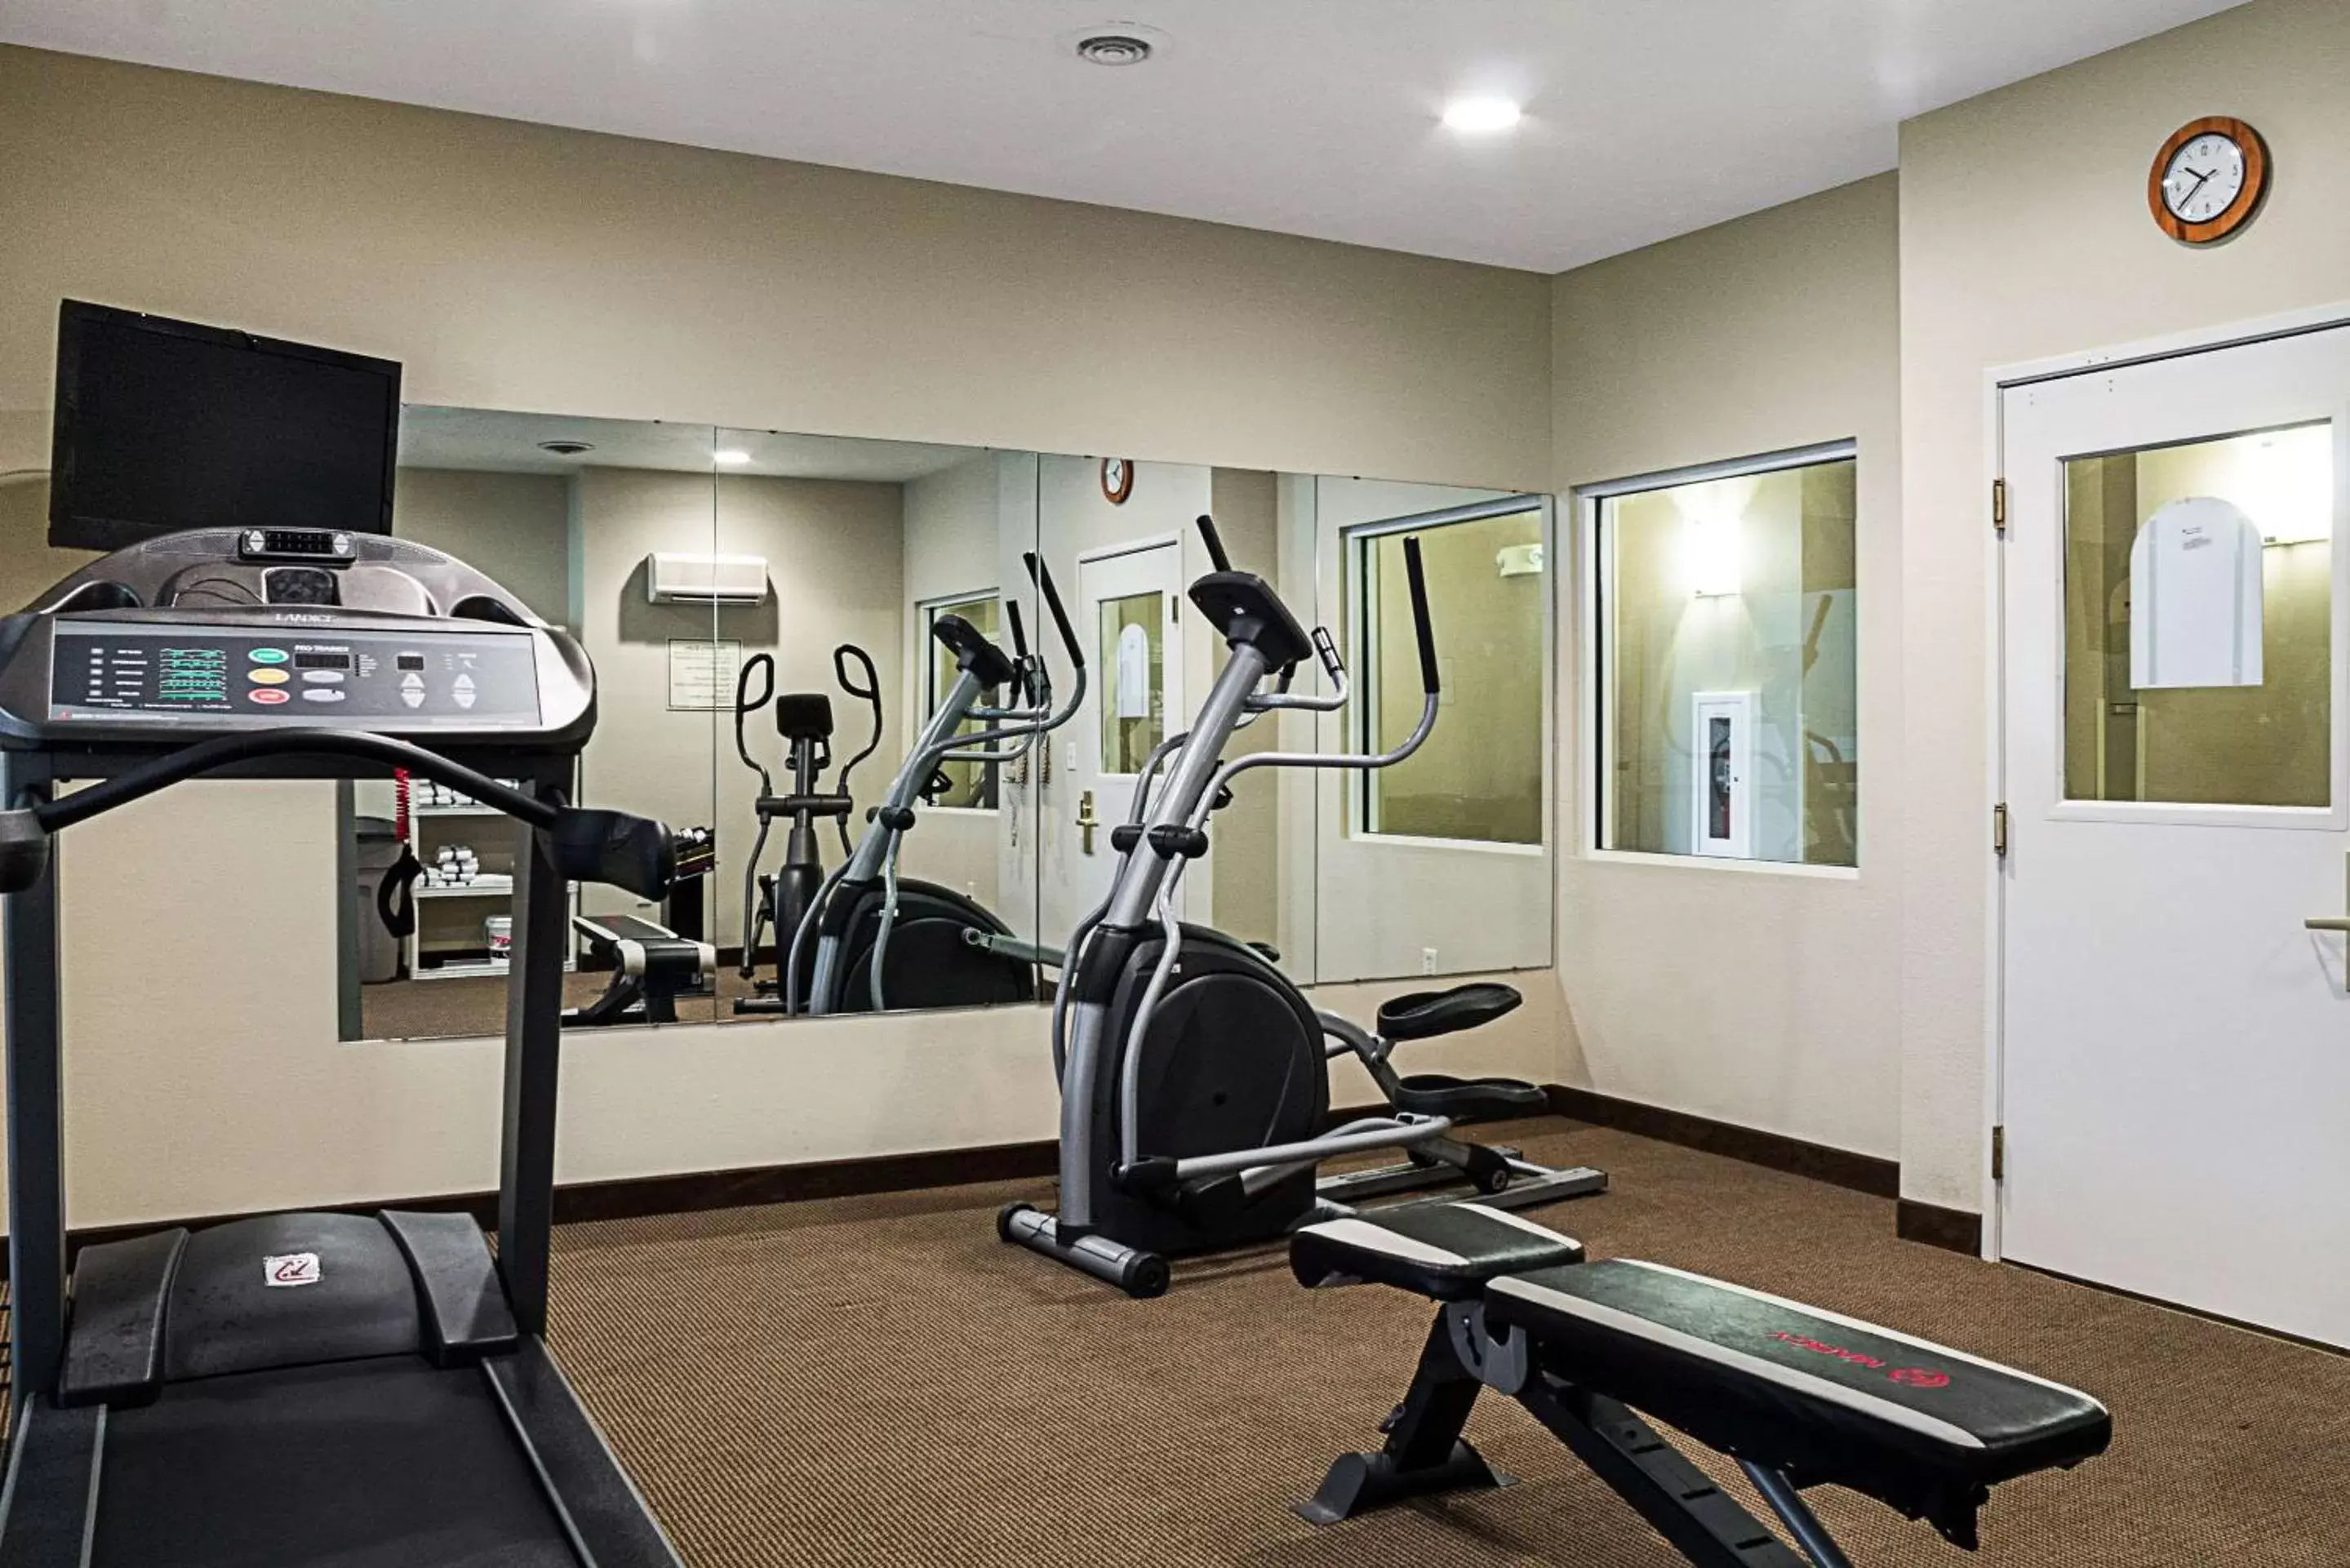 Fitness centre/facilities, Fitness Center/Facilities in MainStay Suites Fargo - I-94 Medical Center